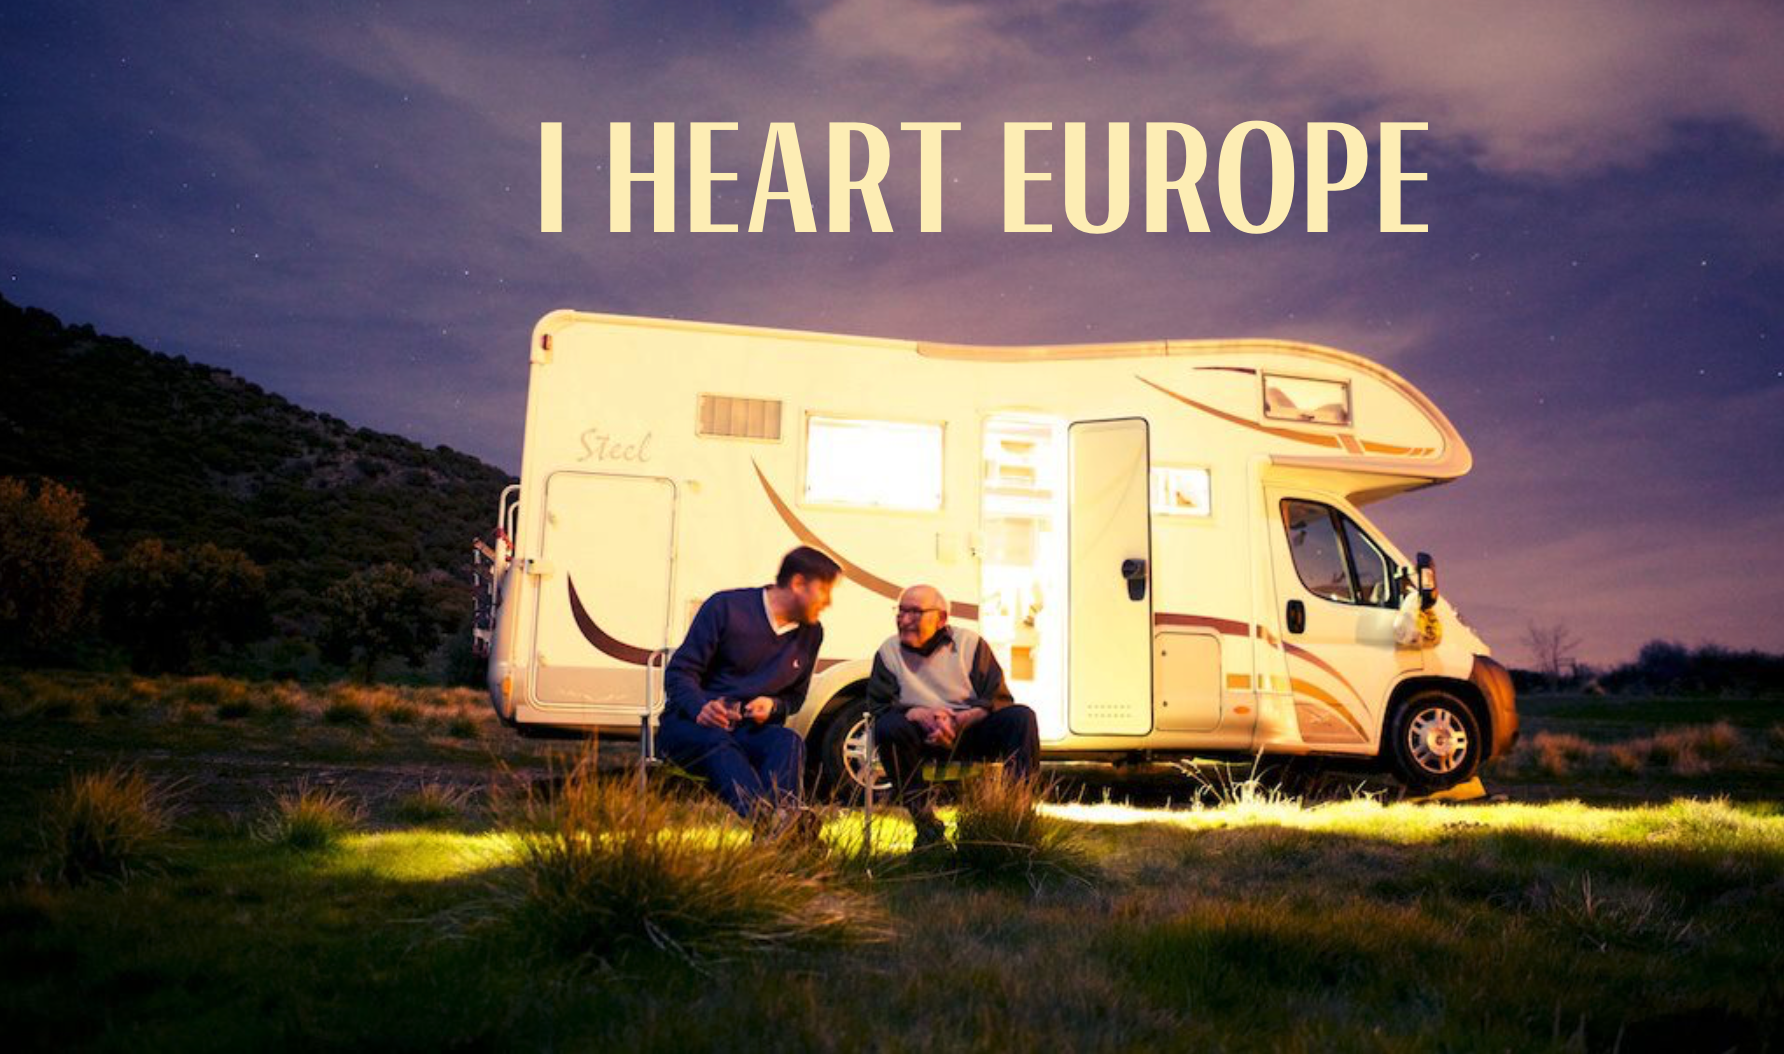 I HEART EUROPE Trailer (2017)